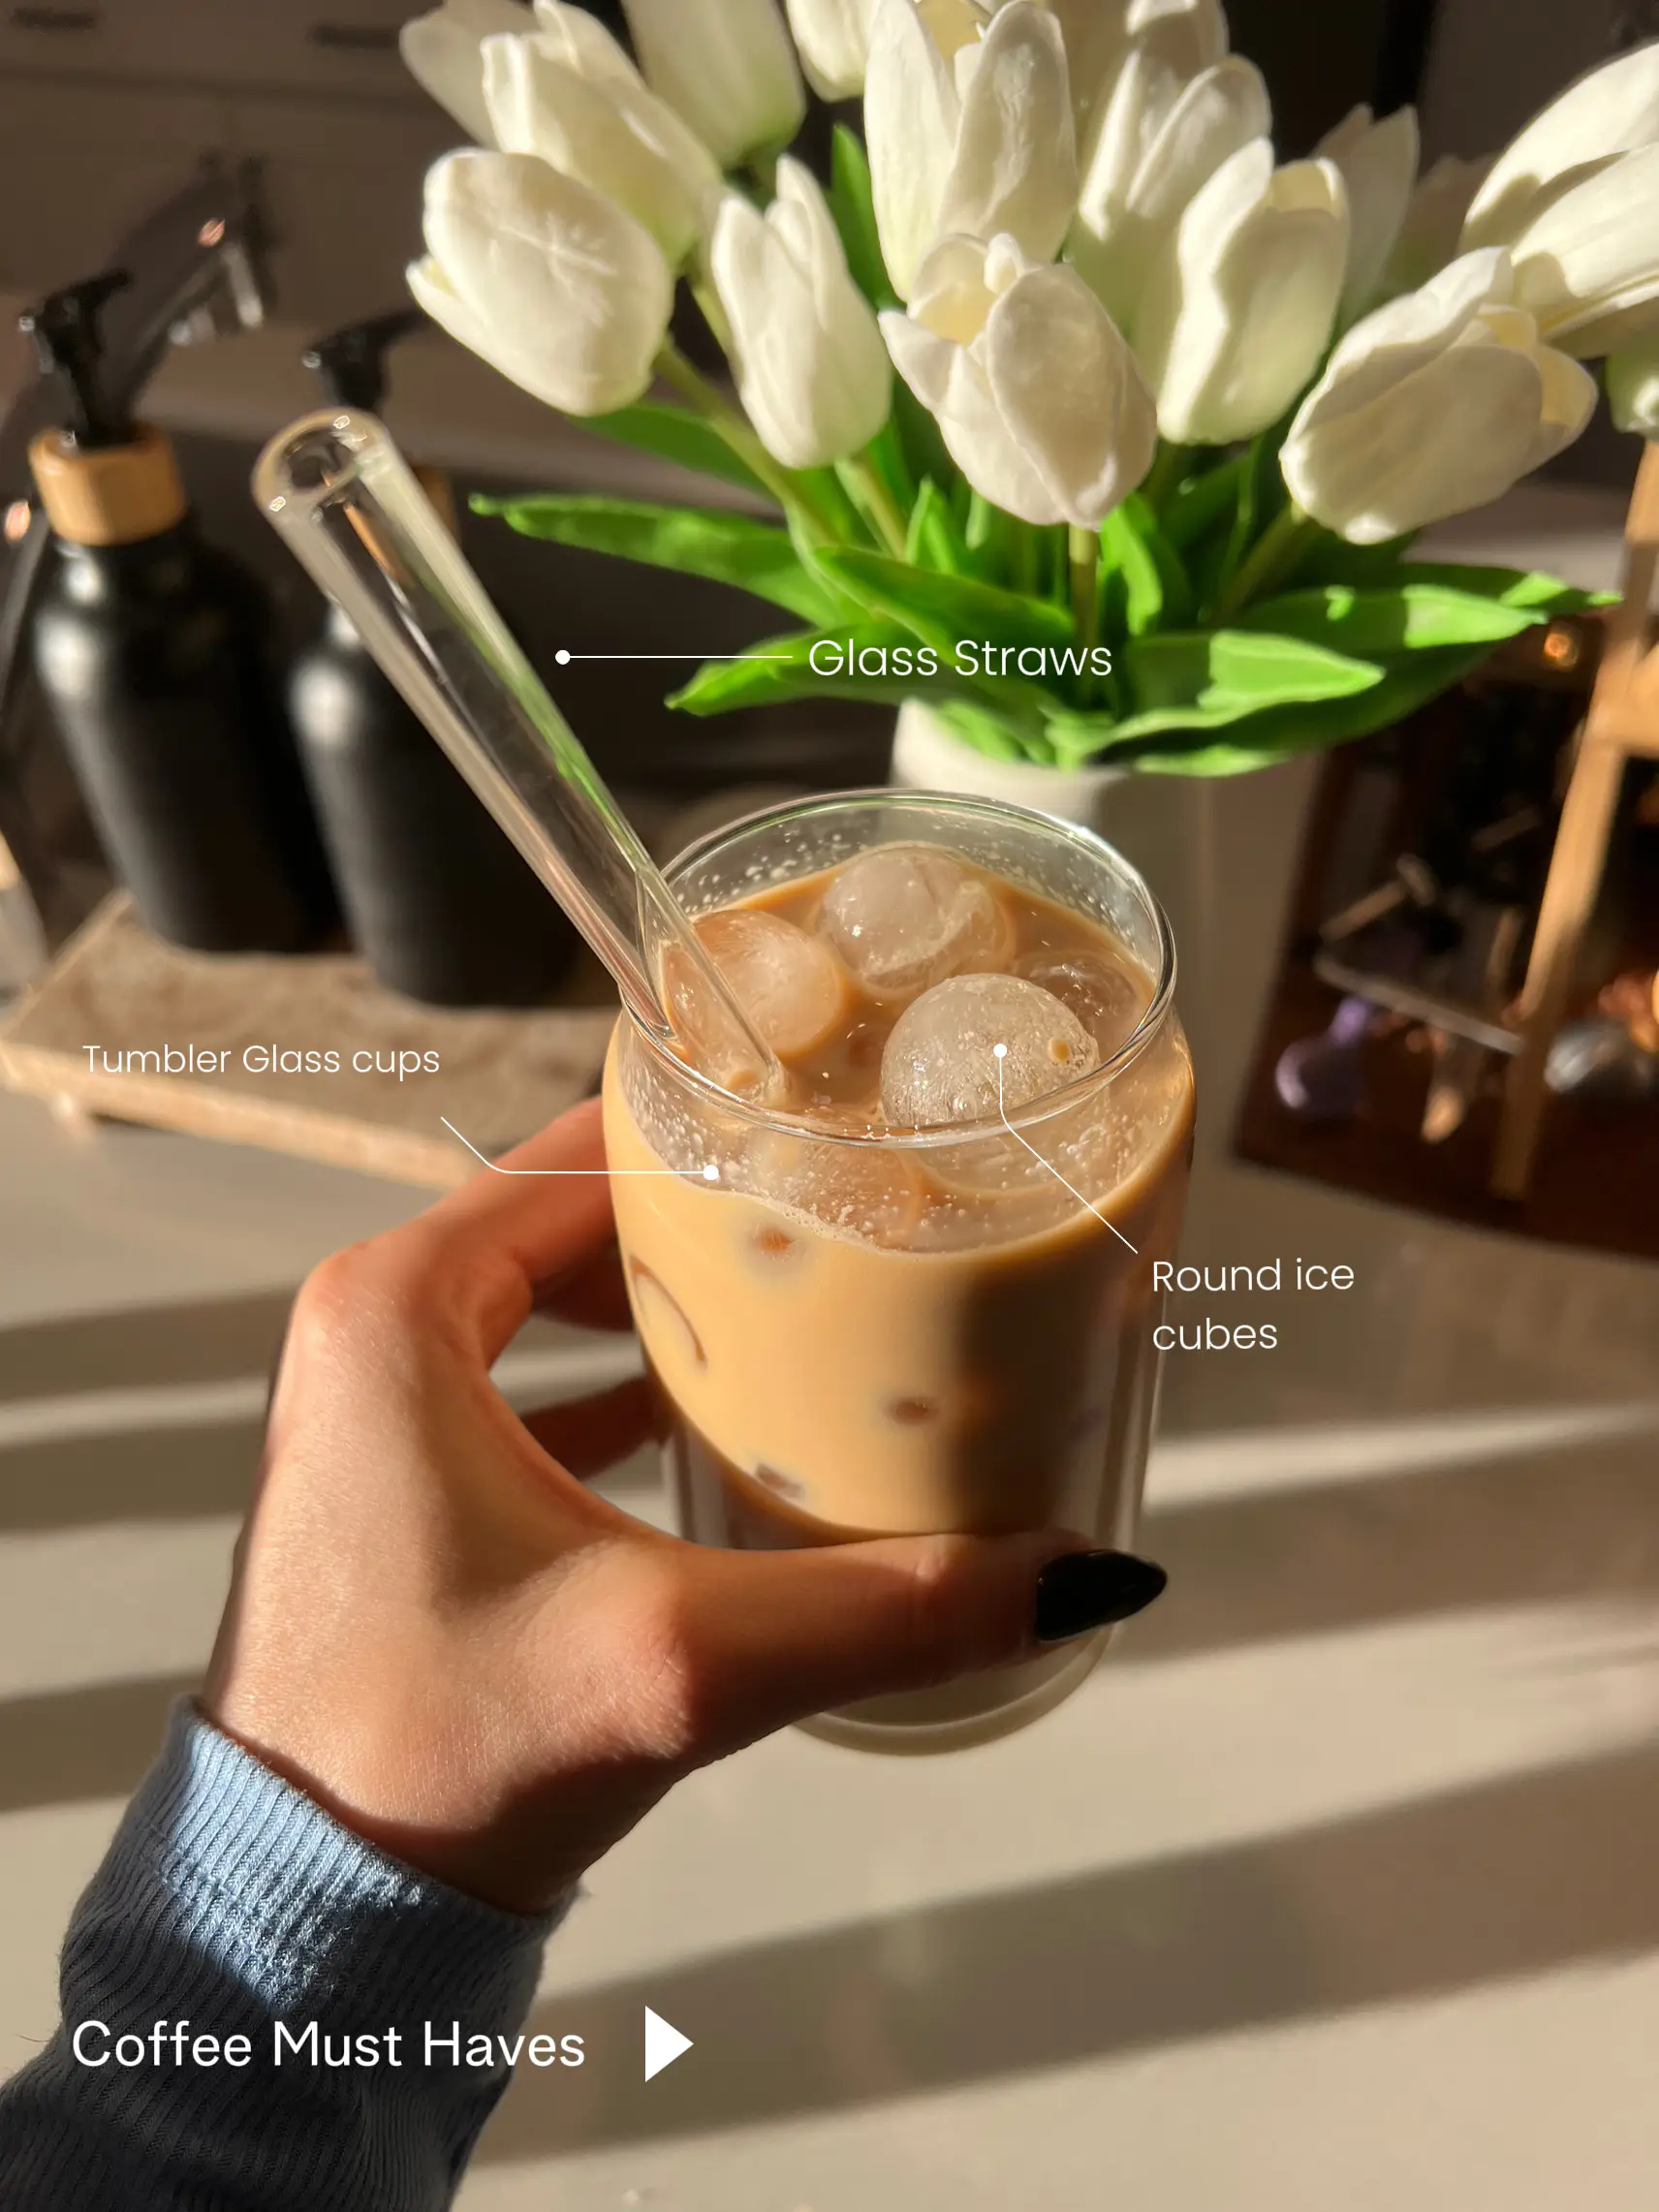 Coffee taste better in cute cups ✨, Gallery posted by Diana Ruiz